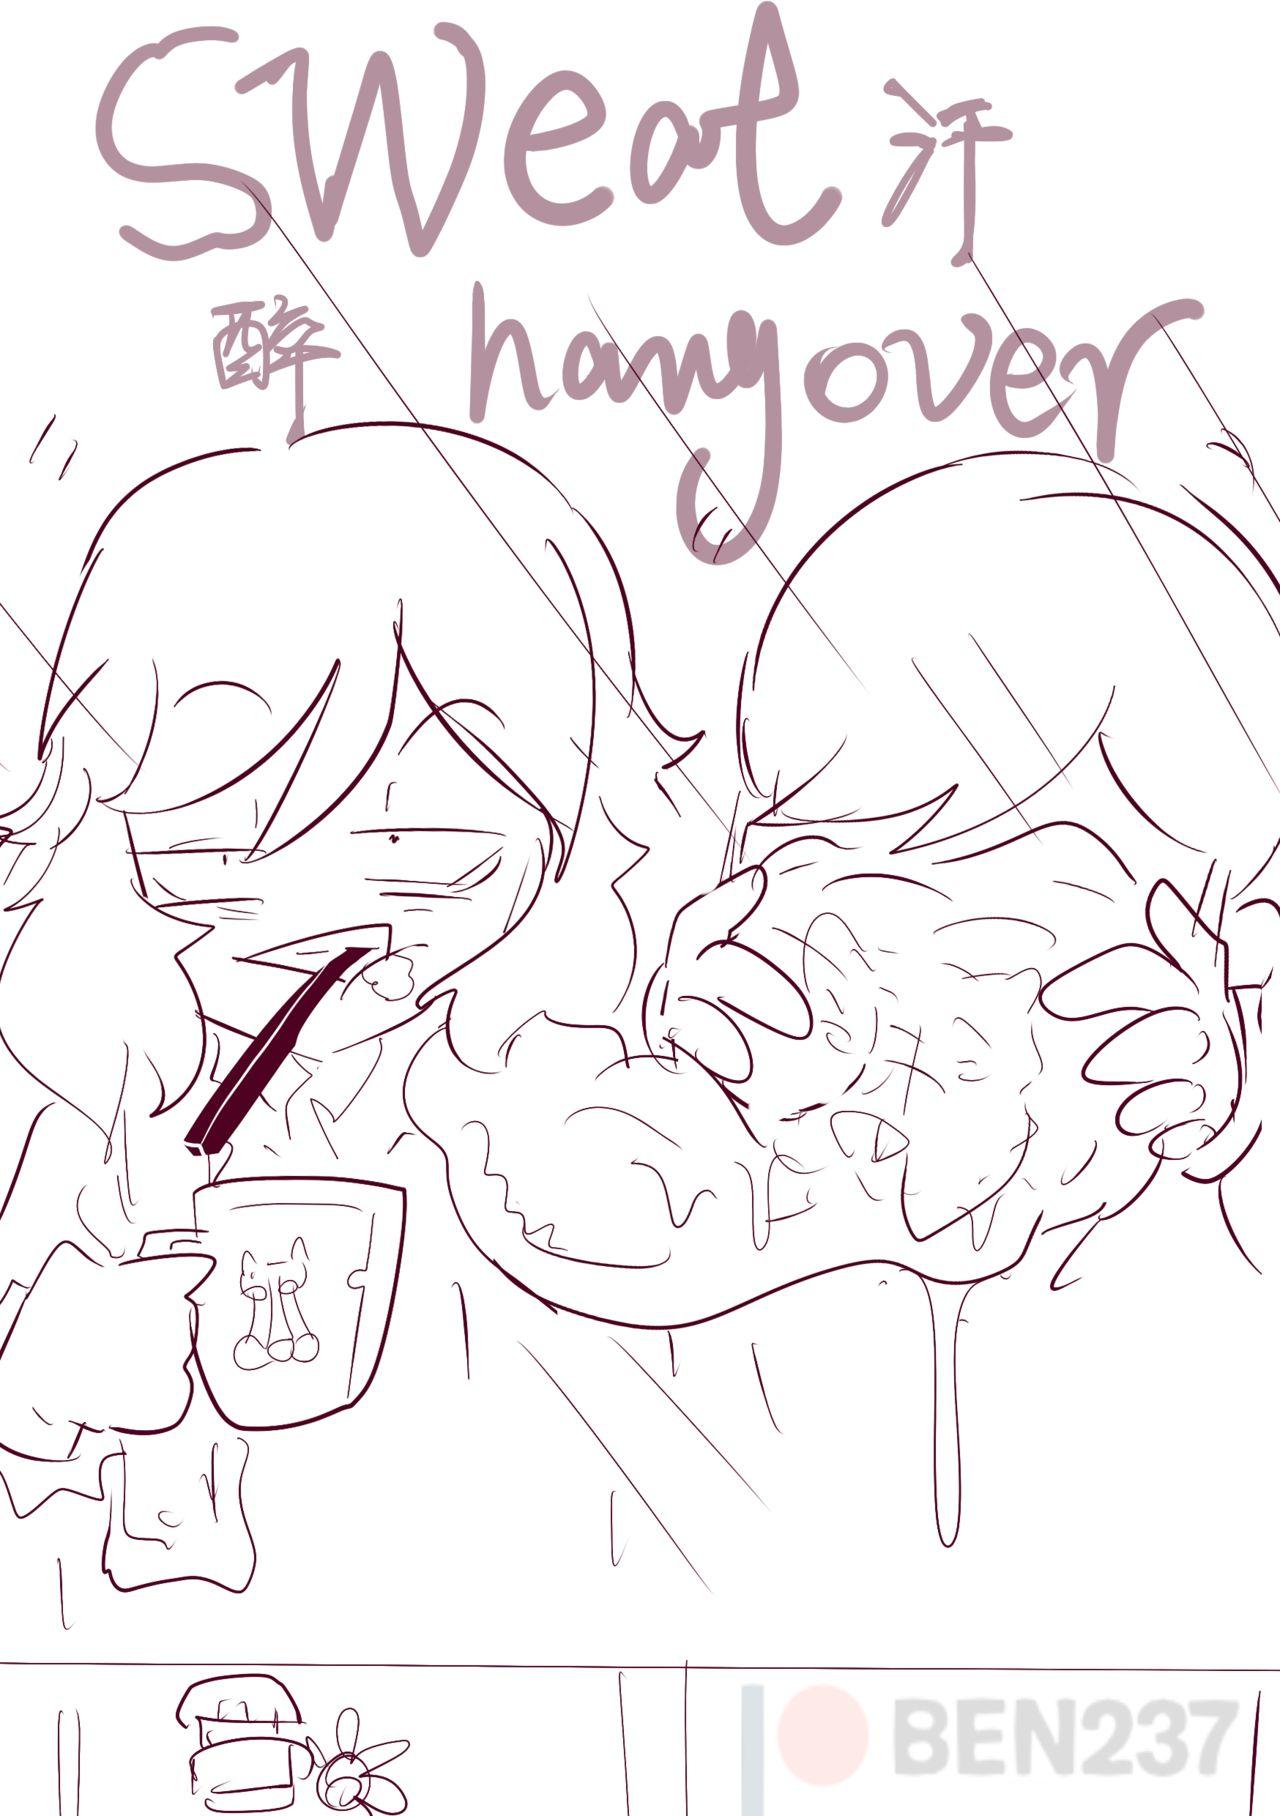 Kansui - sweat hangover. 1